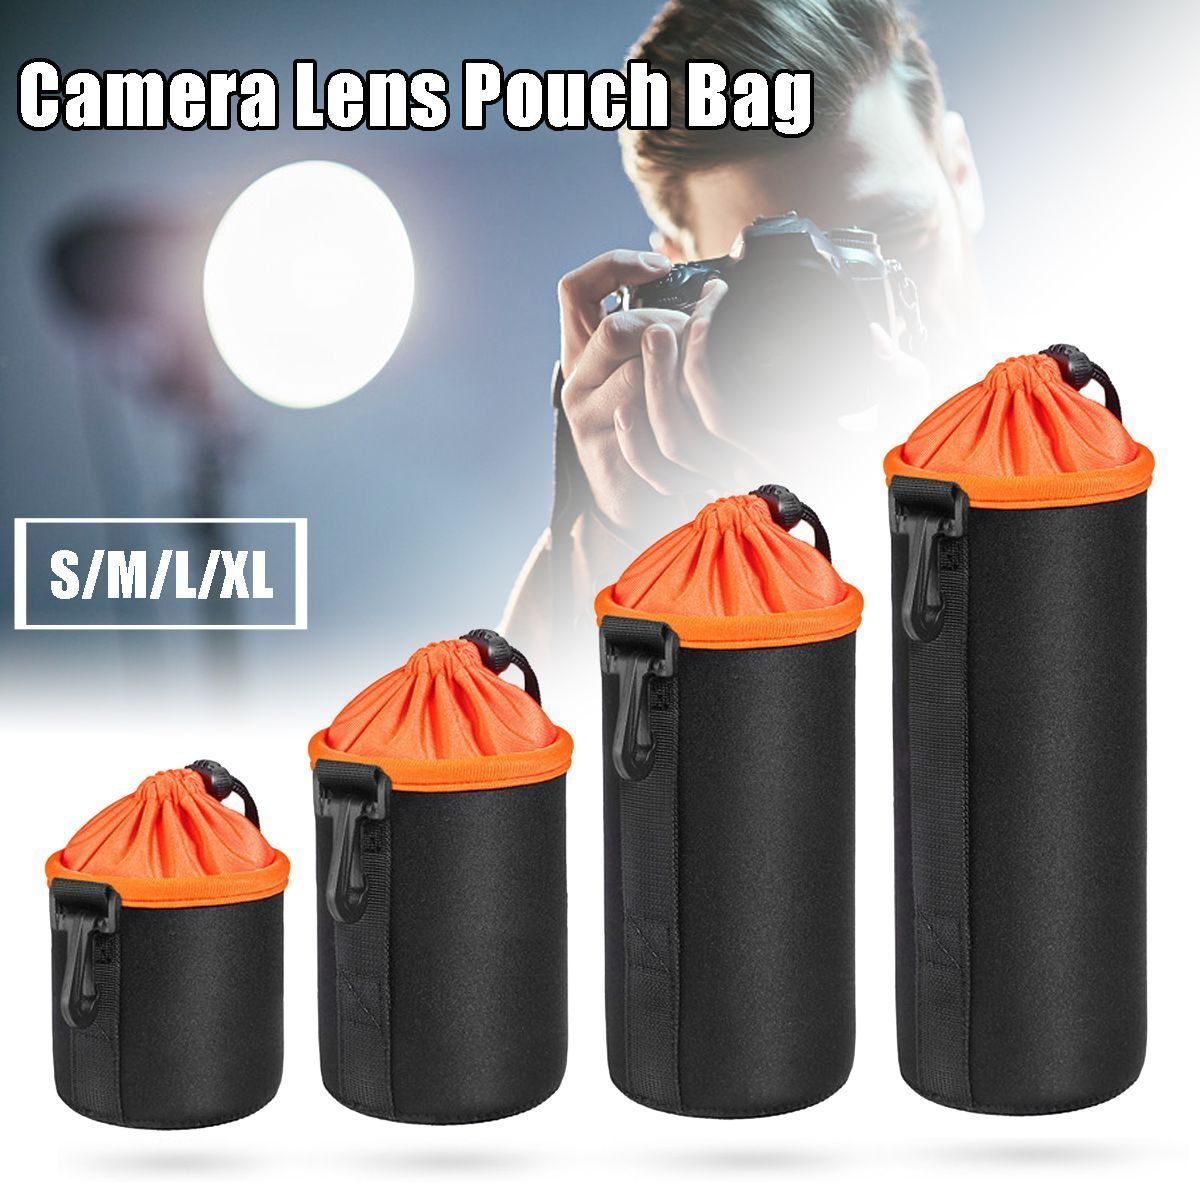 Universal-Protective-Neoprene-Drawstring-Pouch-Bag-Case-Cover-for-DSLR-Camera-Lens-4-Size-1301986